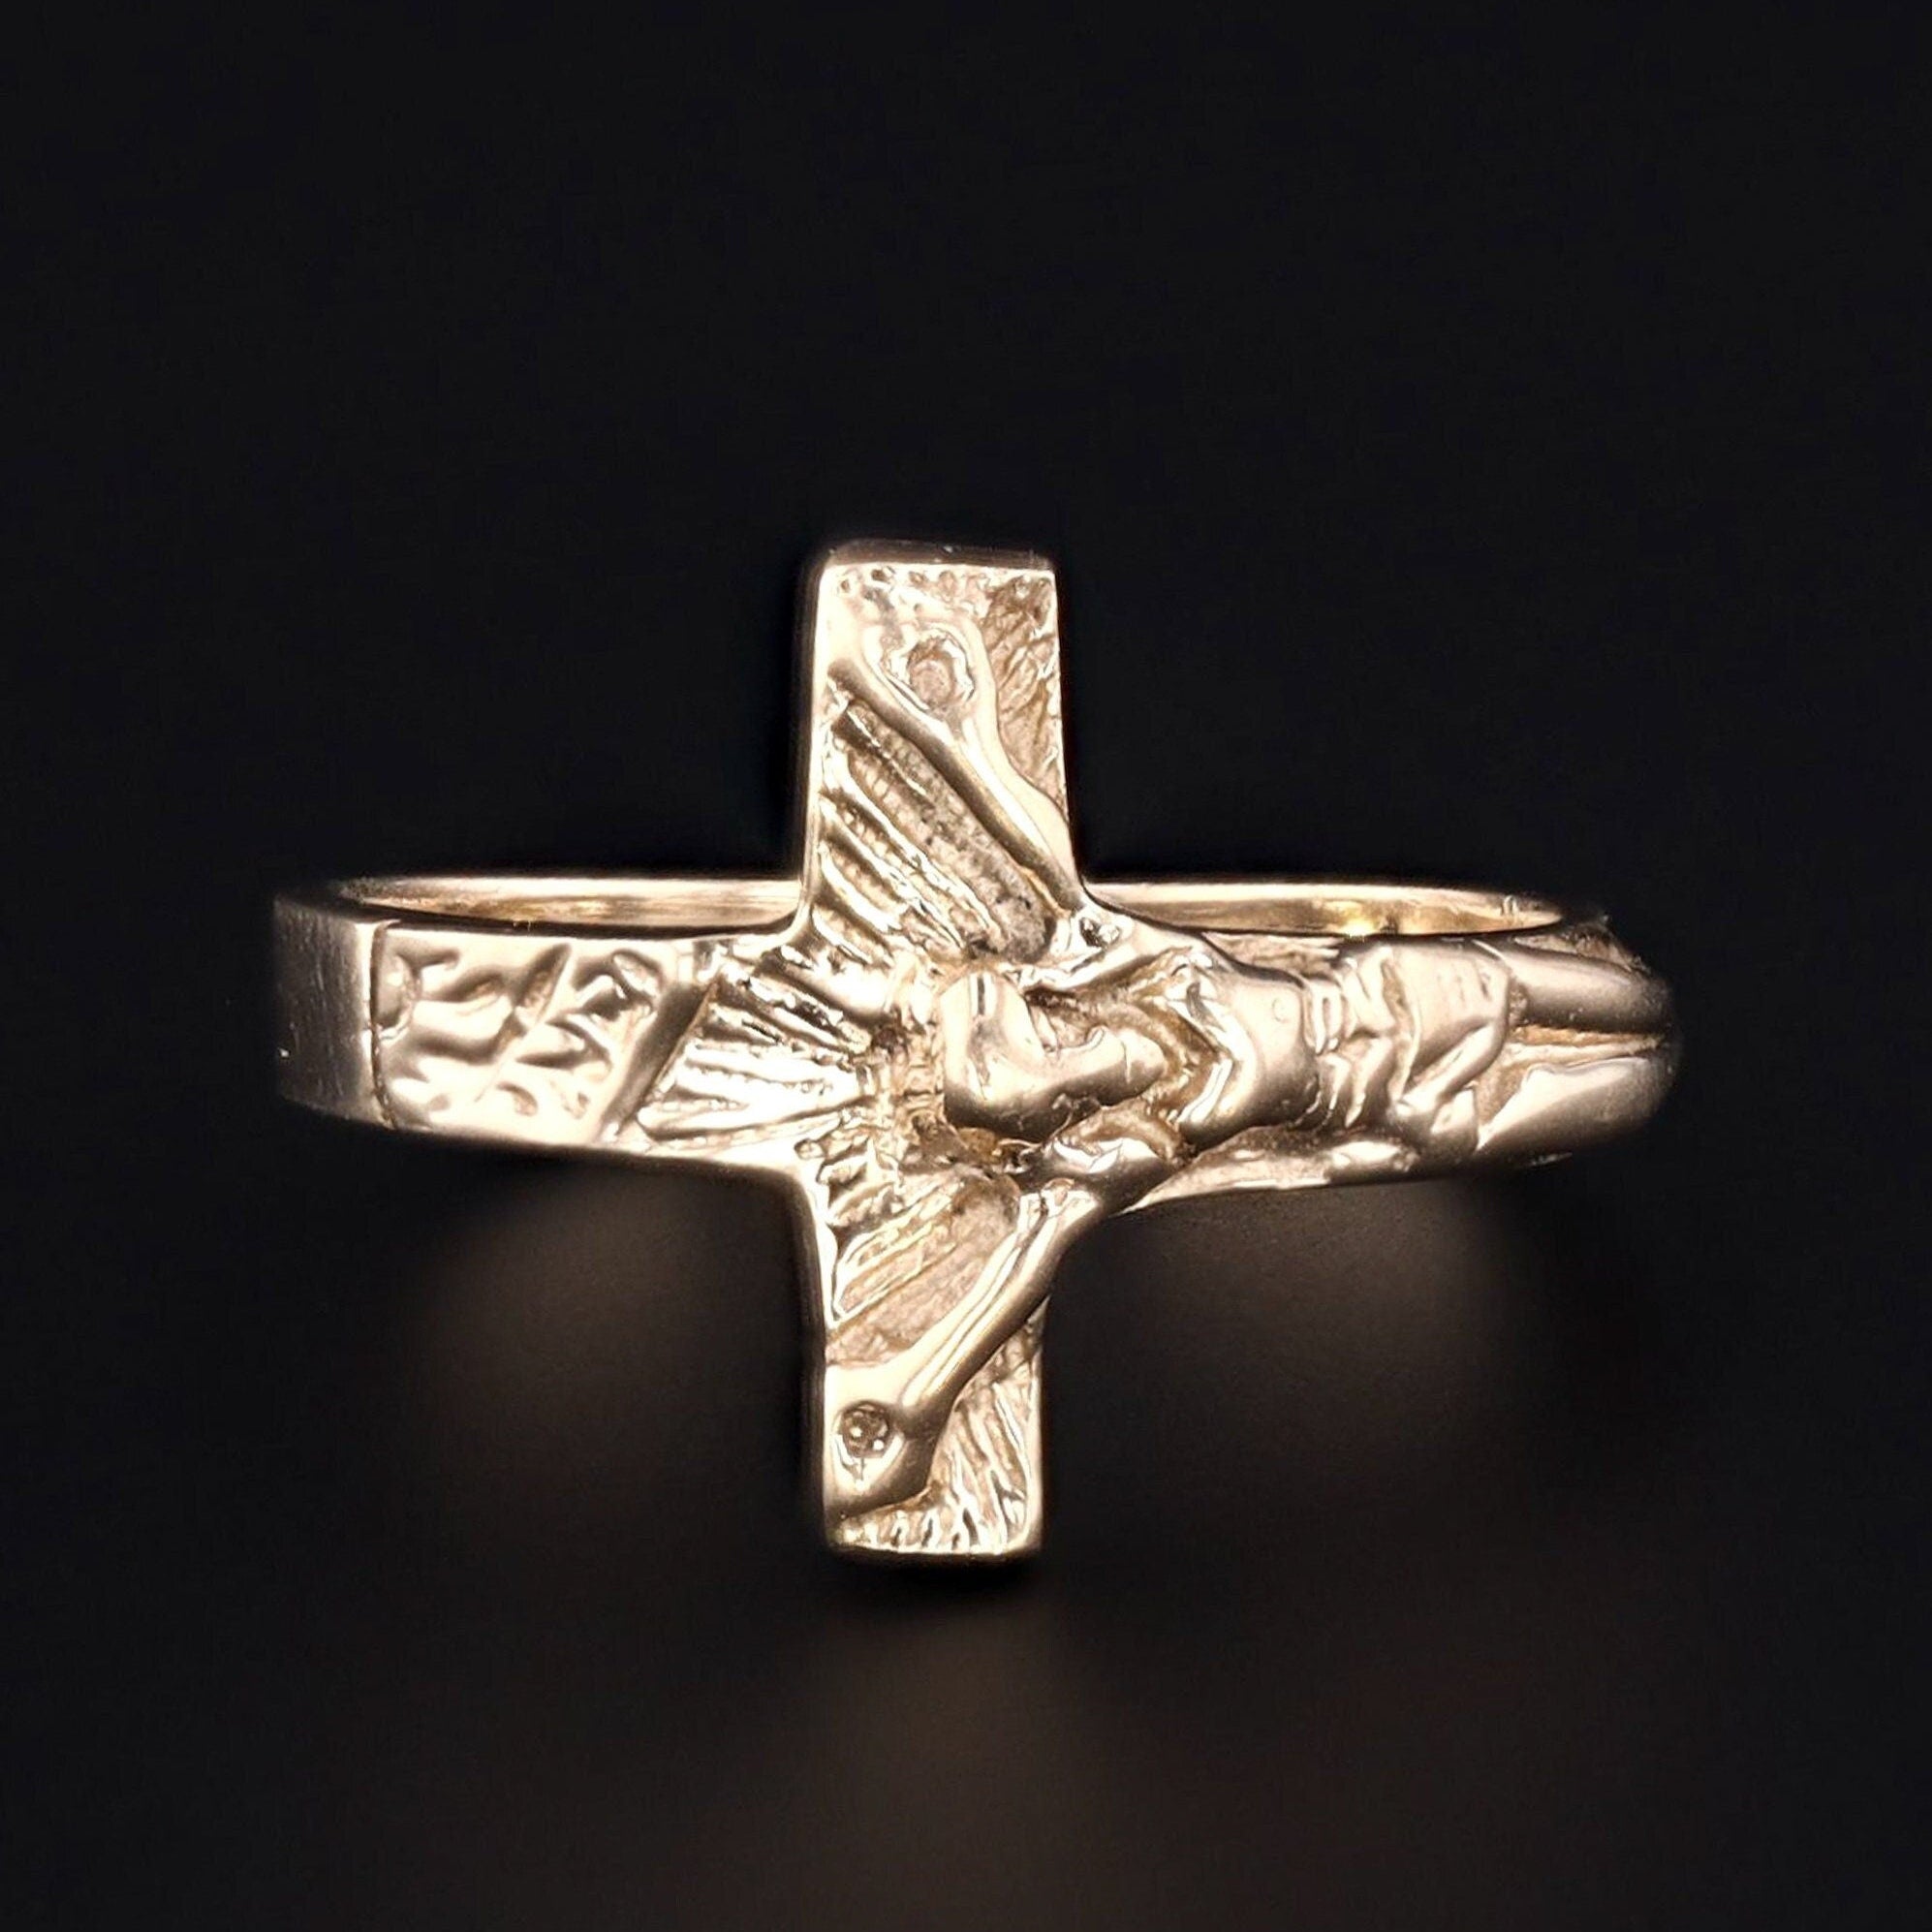 Vintage 10k Gold Crucifix or Cross Ring | Sideways or Side Cross Ring 